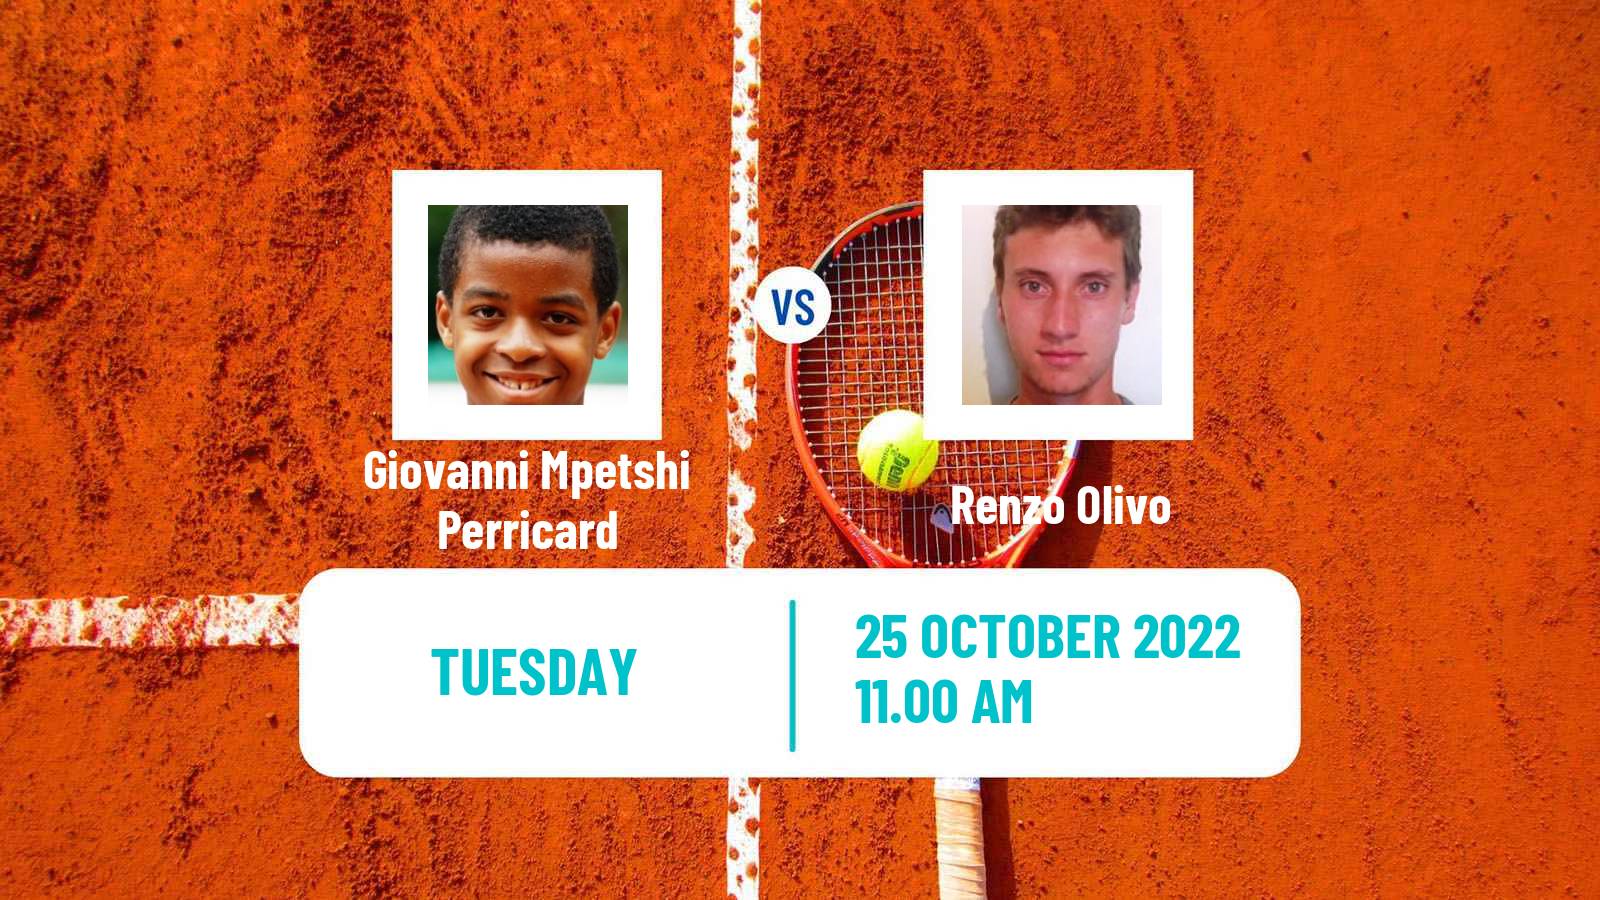 Tennis ATP Challenger Giovanni Mpetshi Perricard - Renzo Olivo